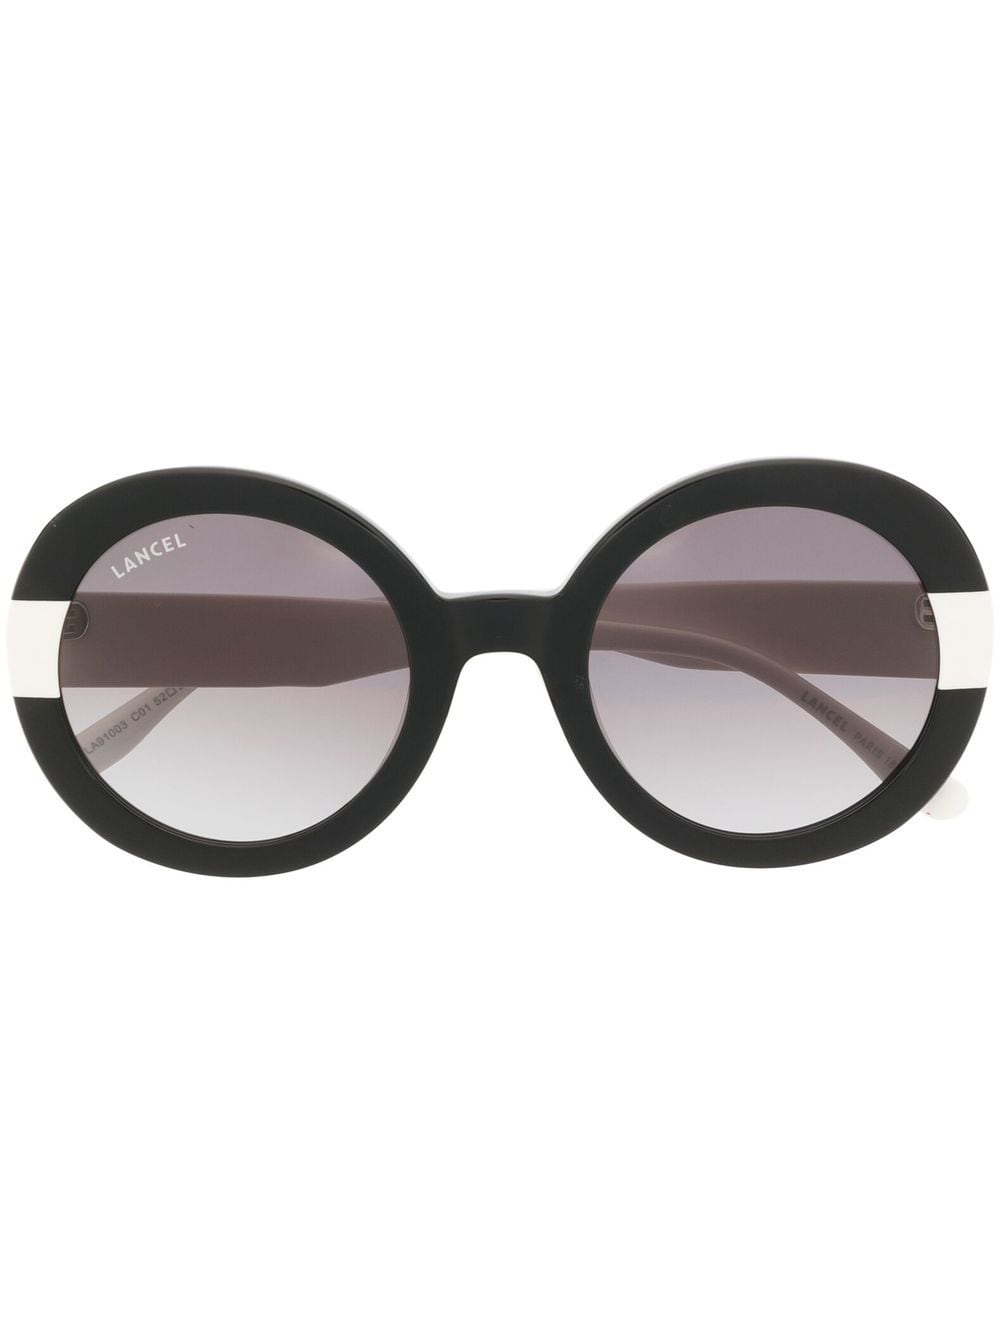 Lancel Rose round-frame sunglasses - Black